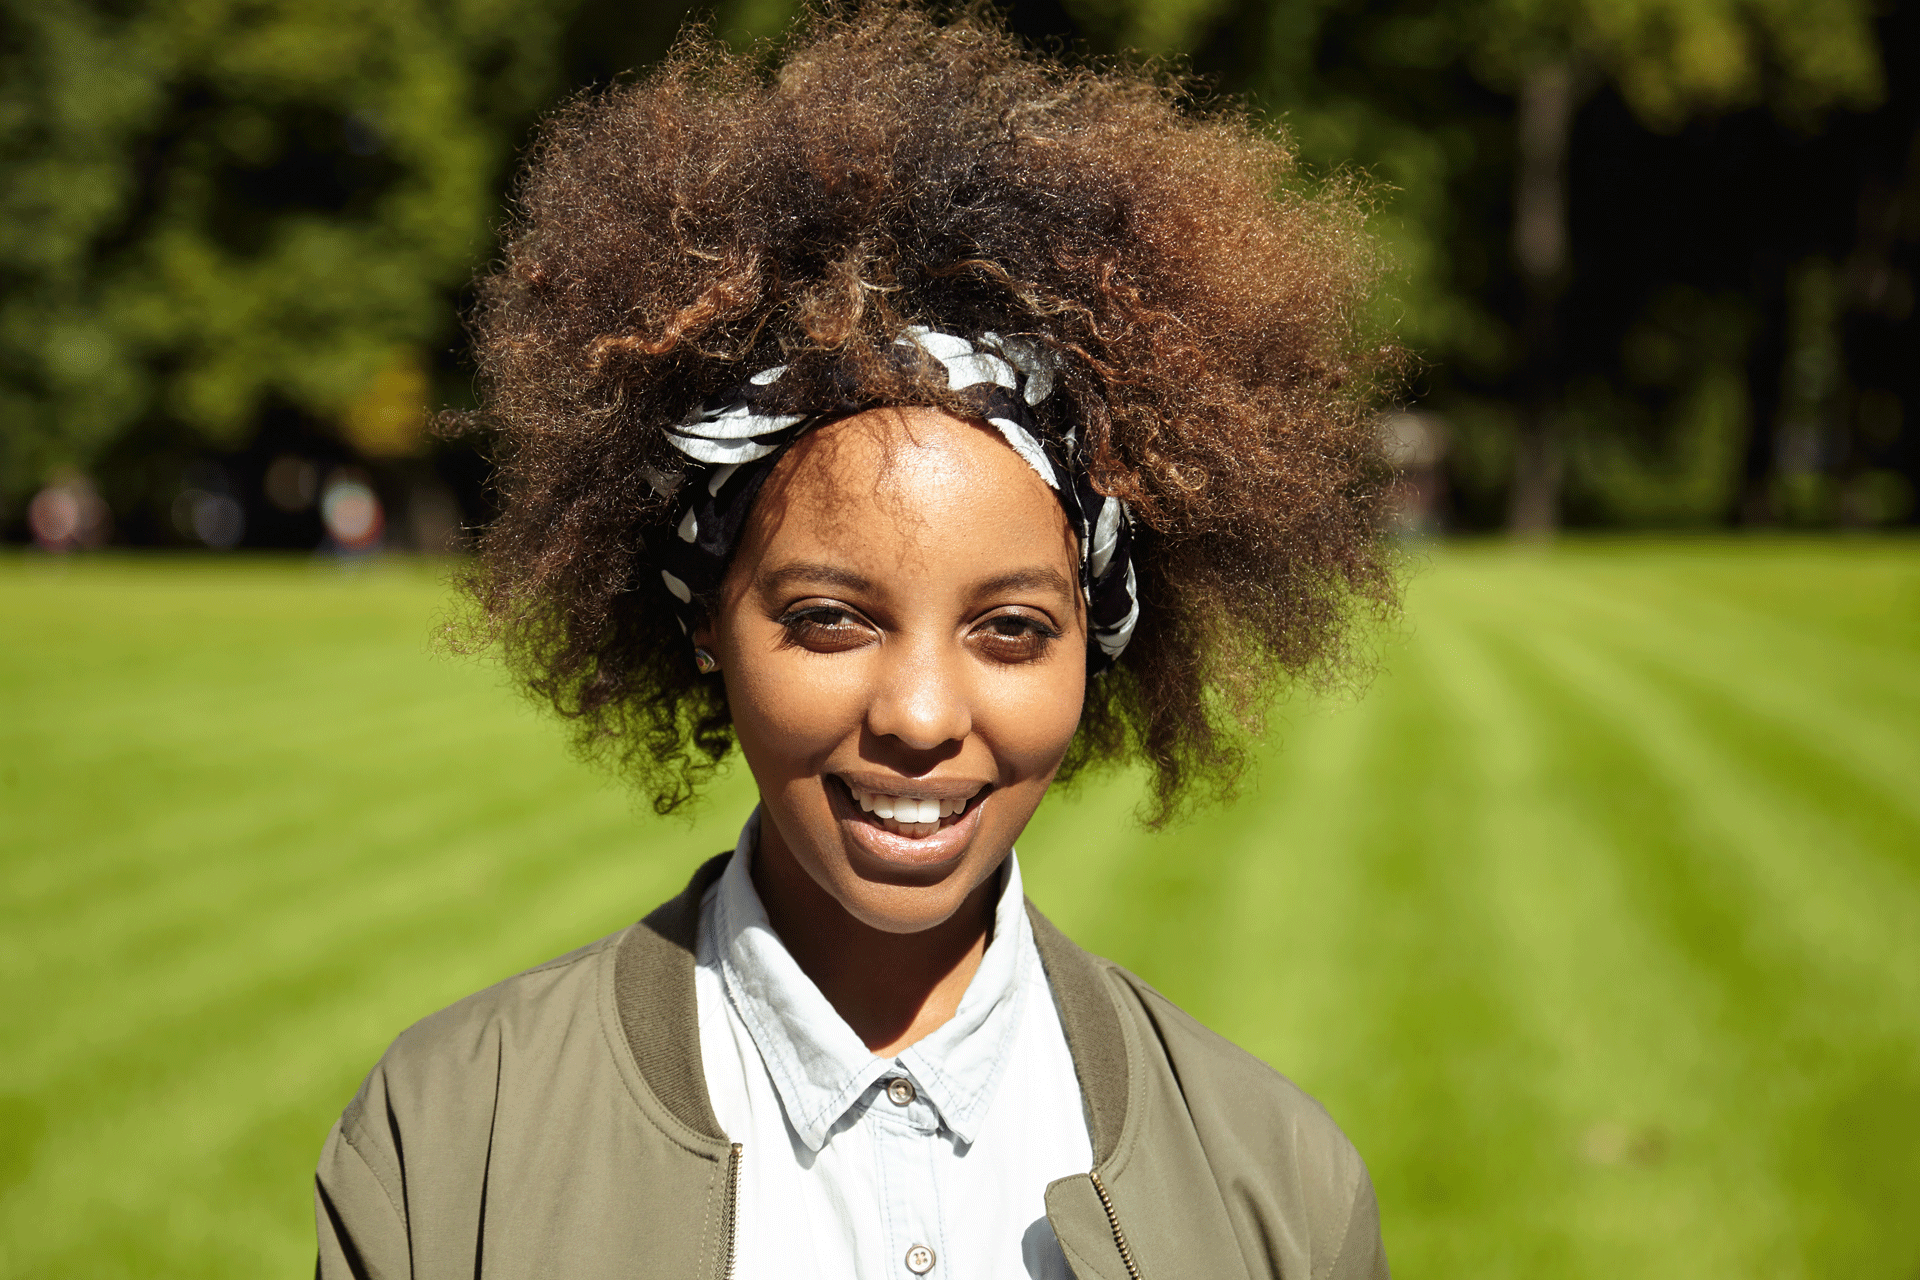 Joyful, smiling African-American young woman